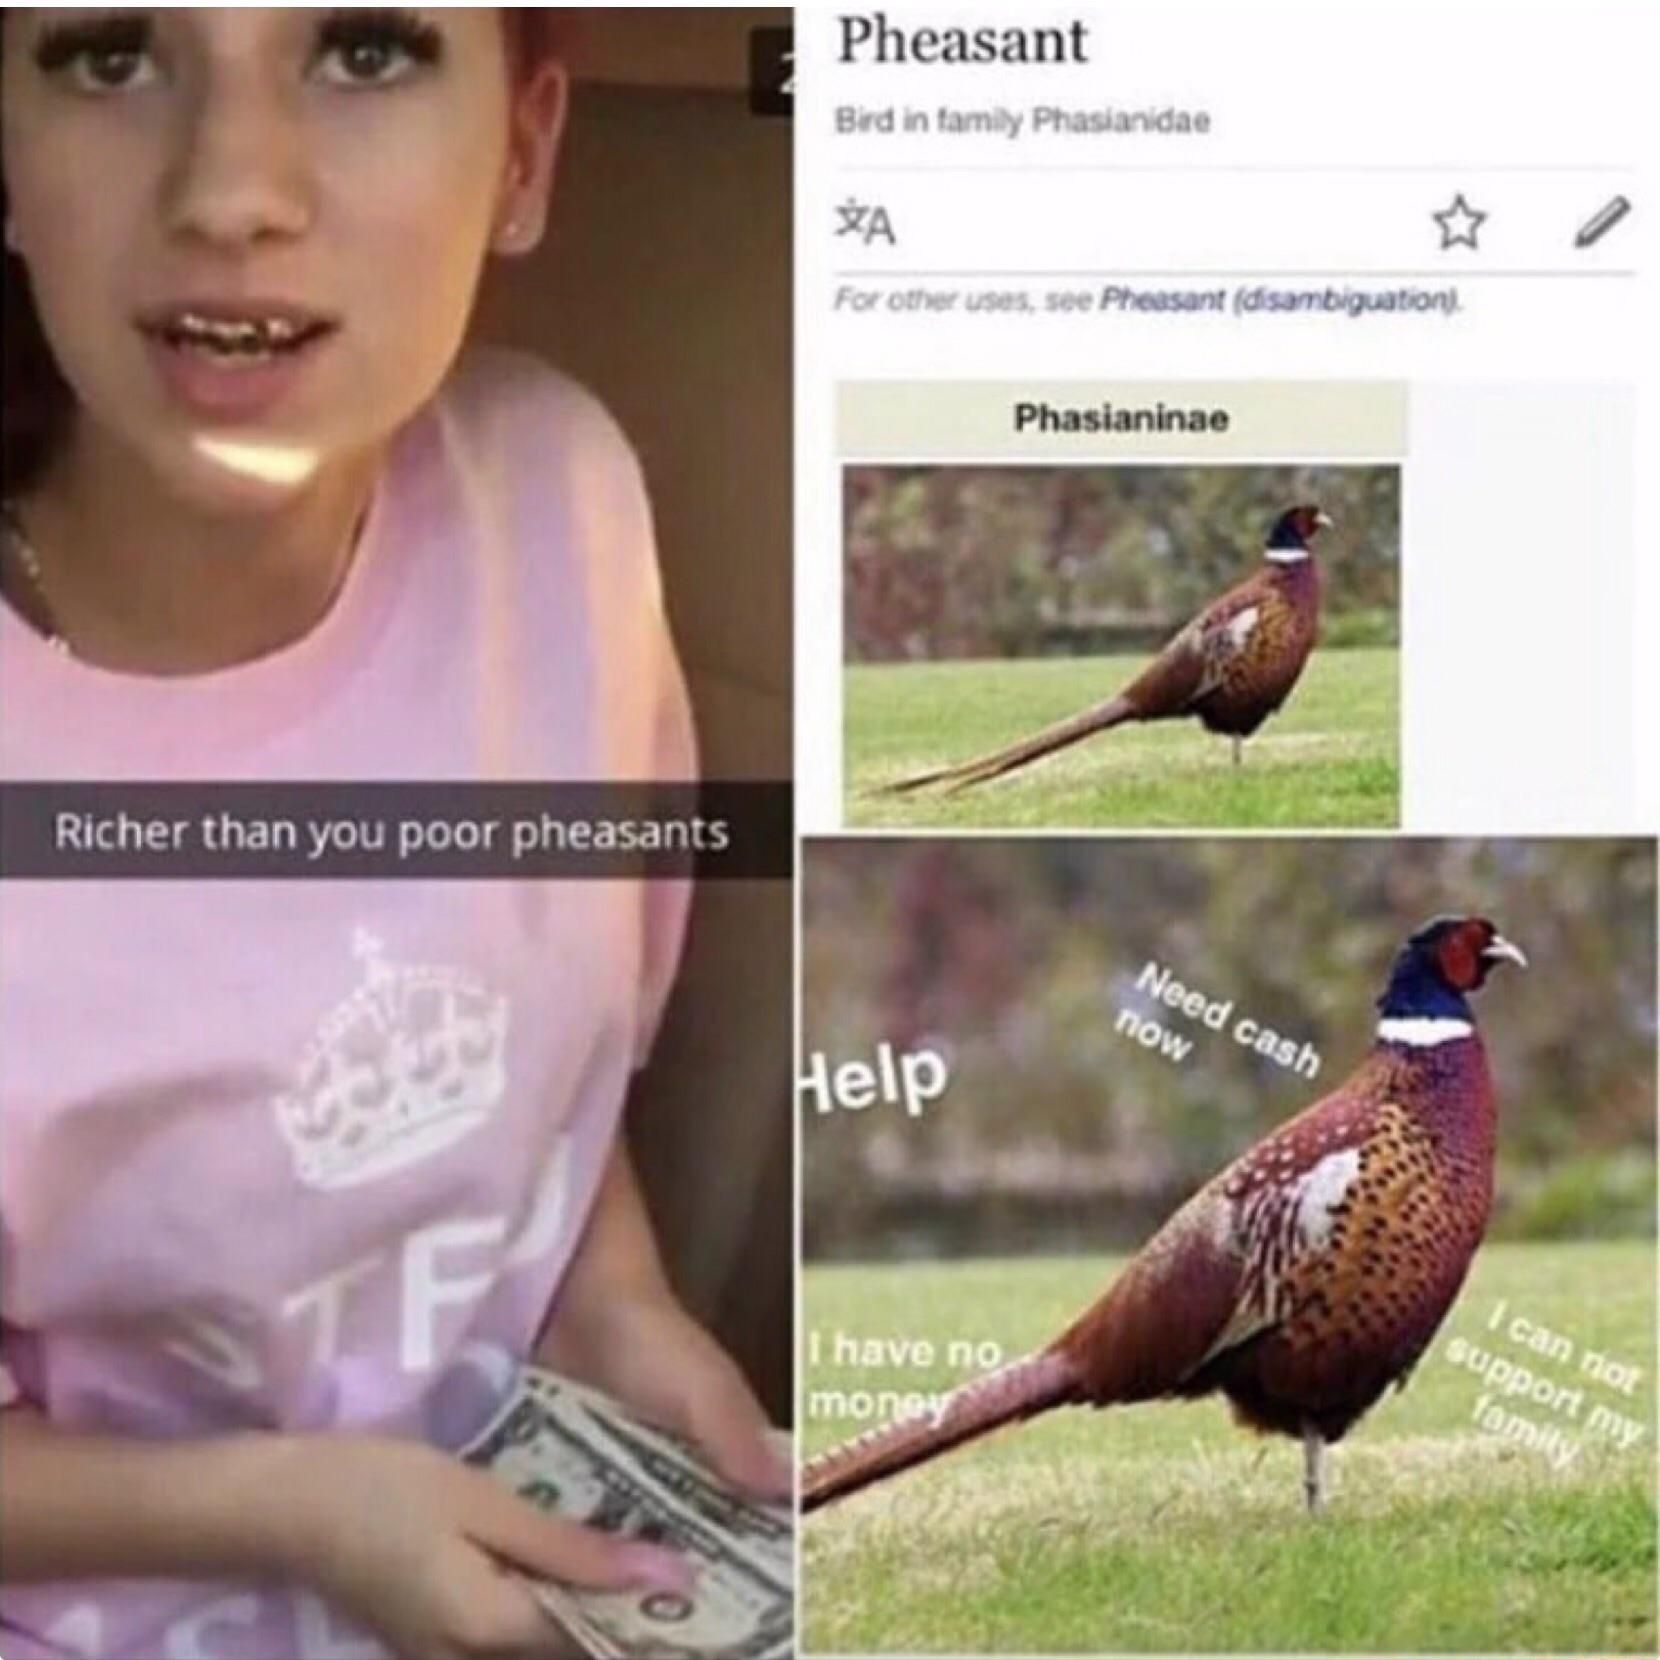 "Pheasants"